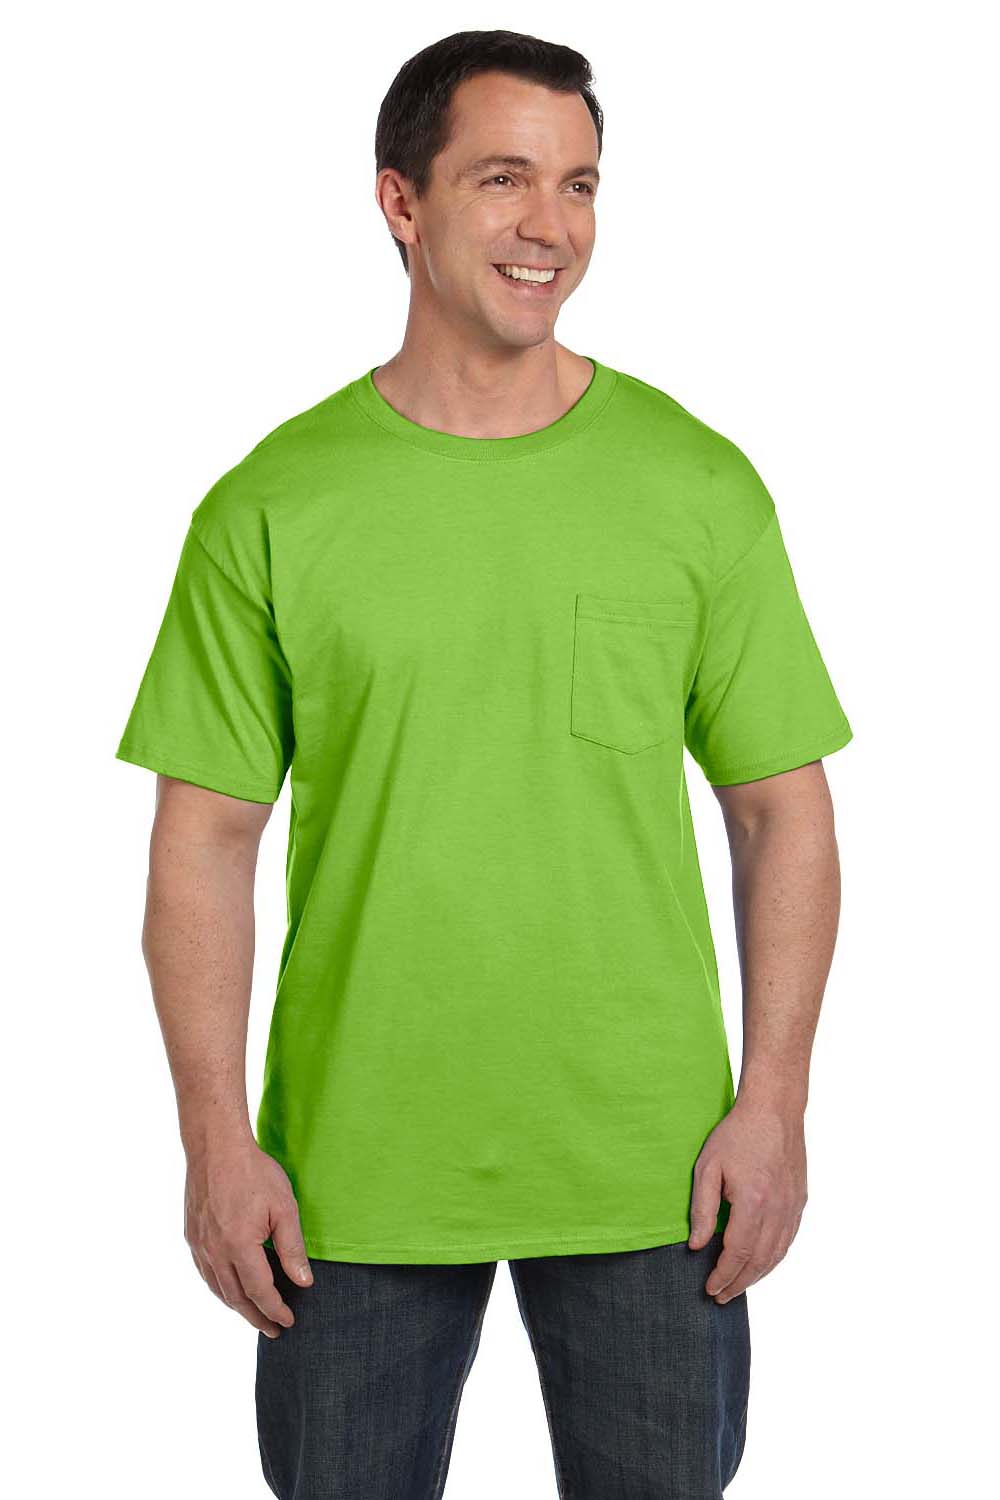 Hanes 5190P Mens Beefy-T Short Sleeve Crewneck T-Shirt w/ Pocket Lime Green Front